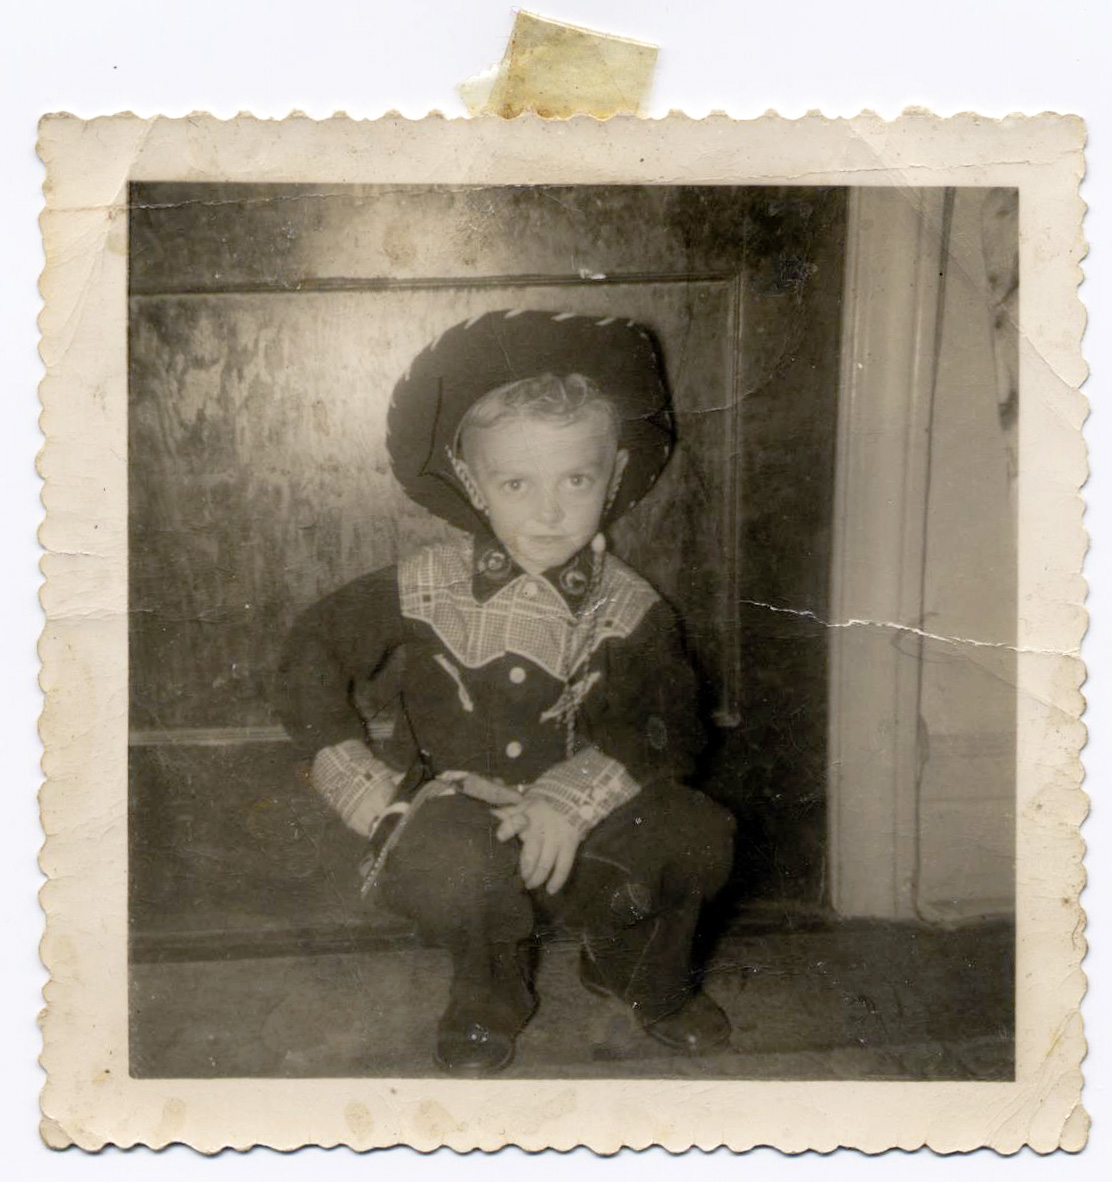 1952 - cowboy dave